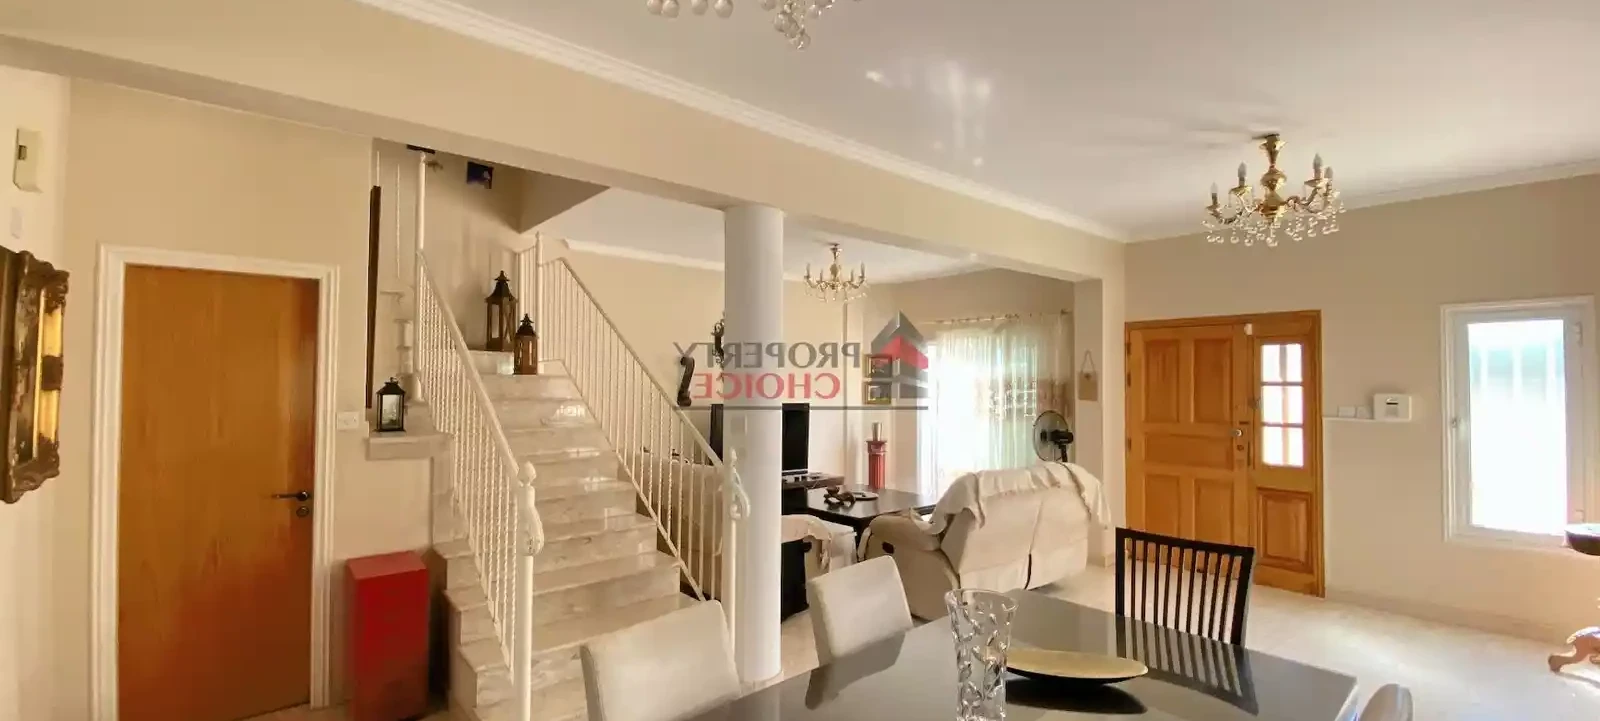 3-bedroom villa fоr sаle €300.000, image 1